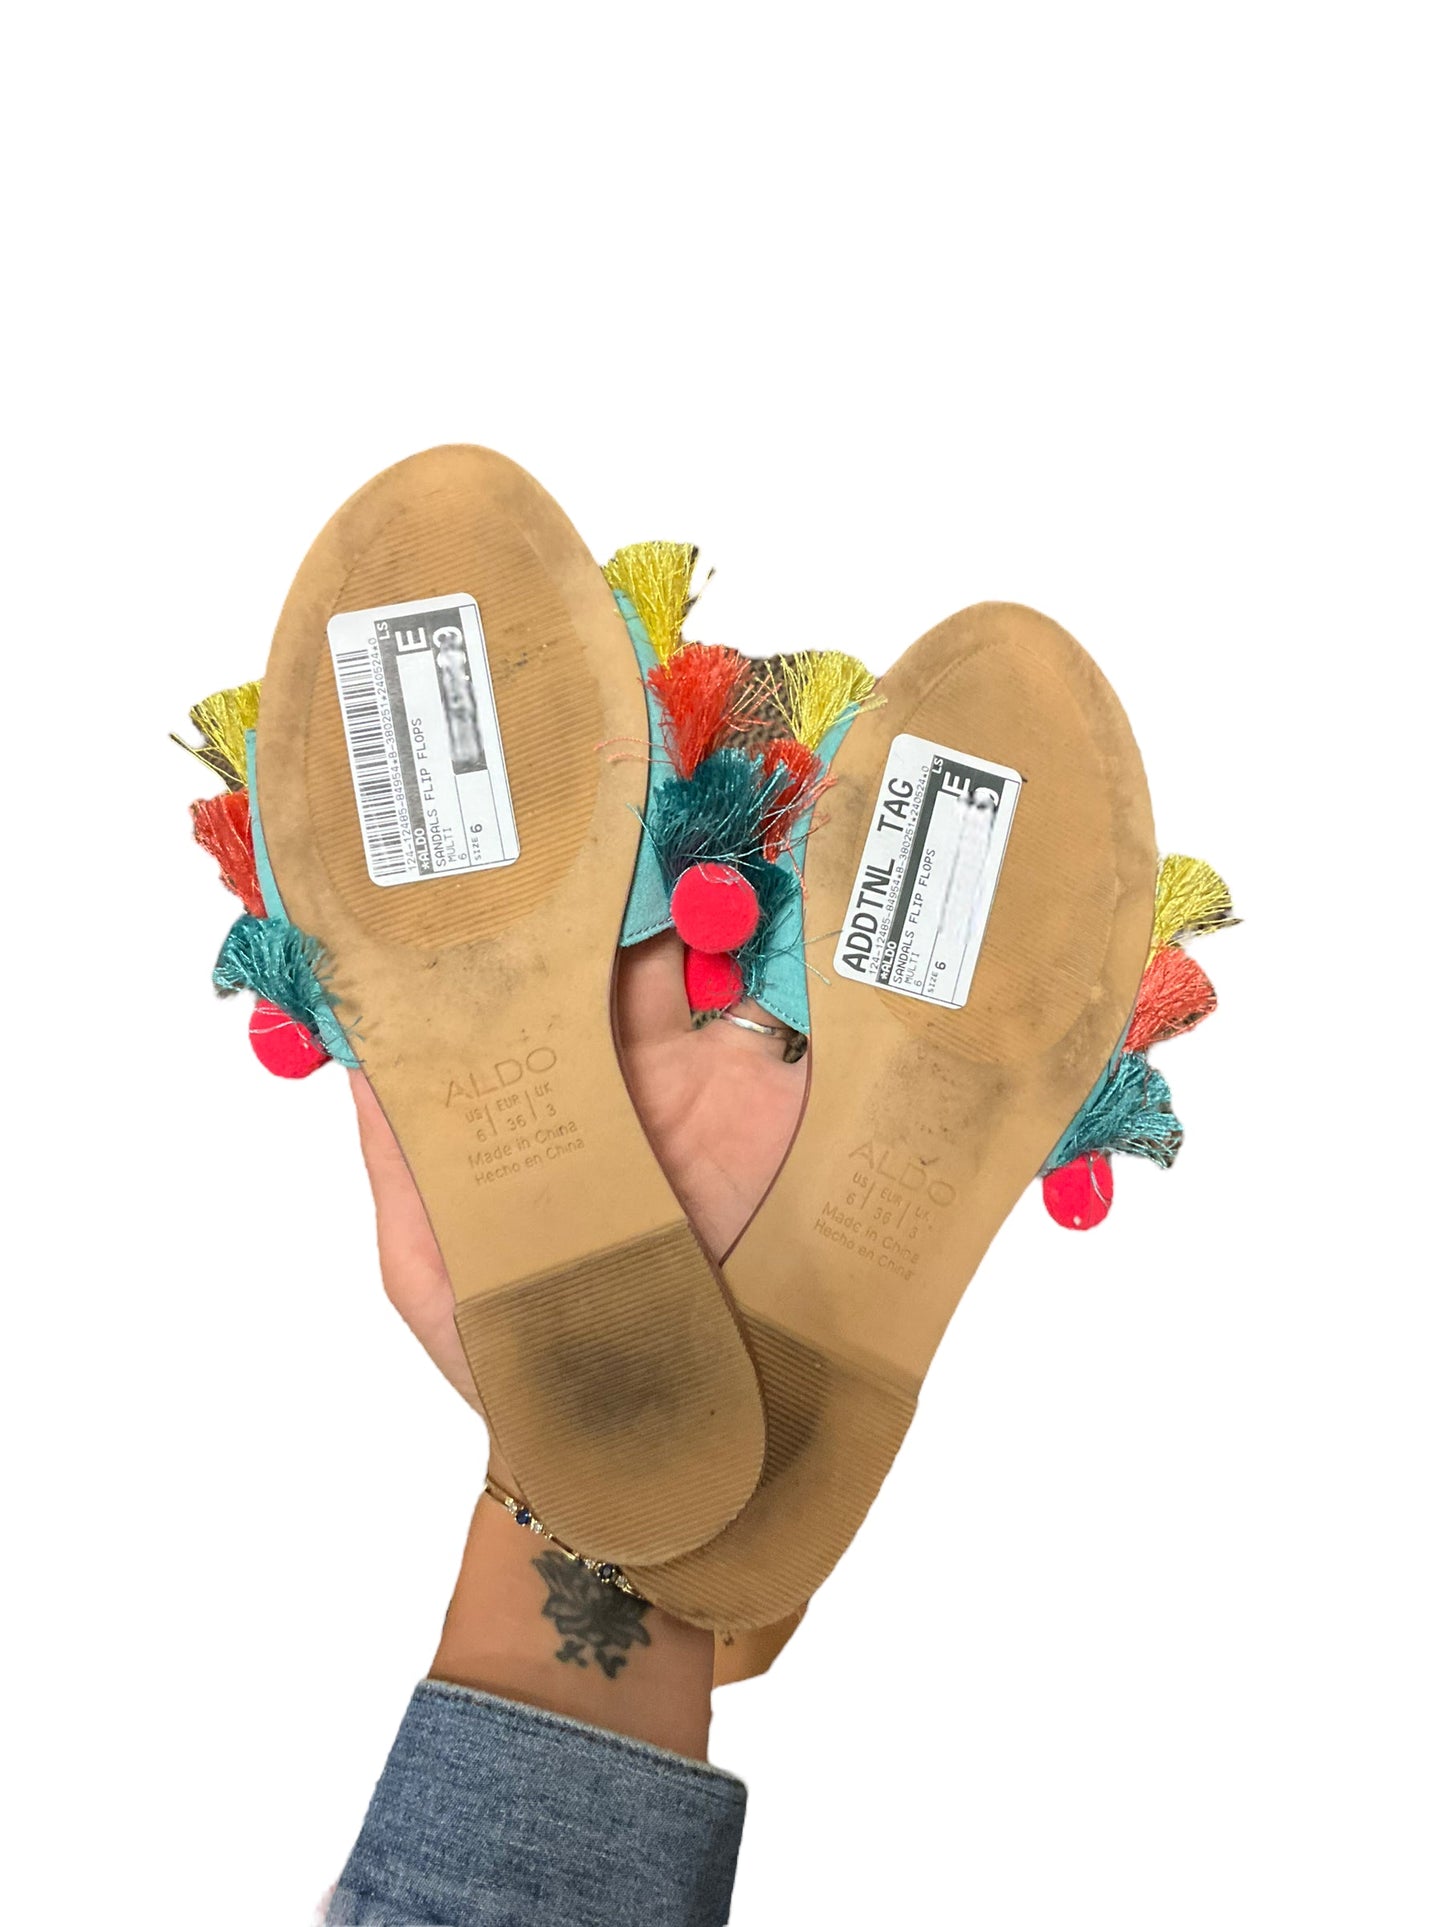 Multi-colored Sandals Flip Flops Aldo, Size 6